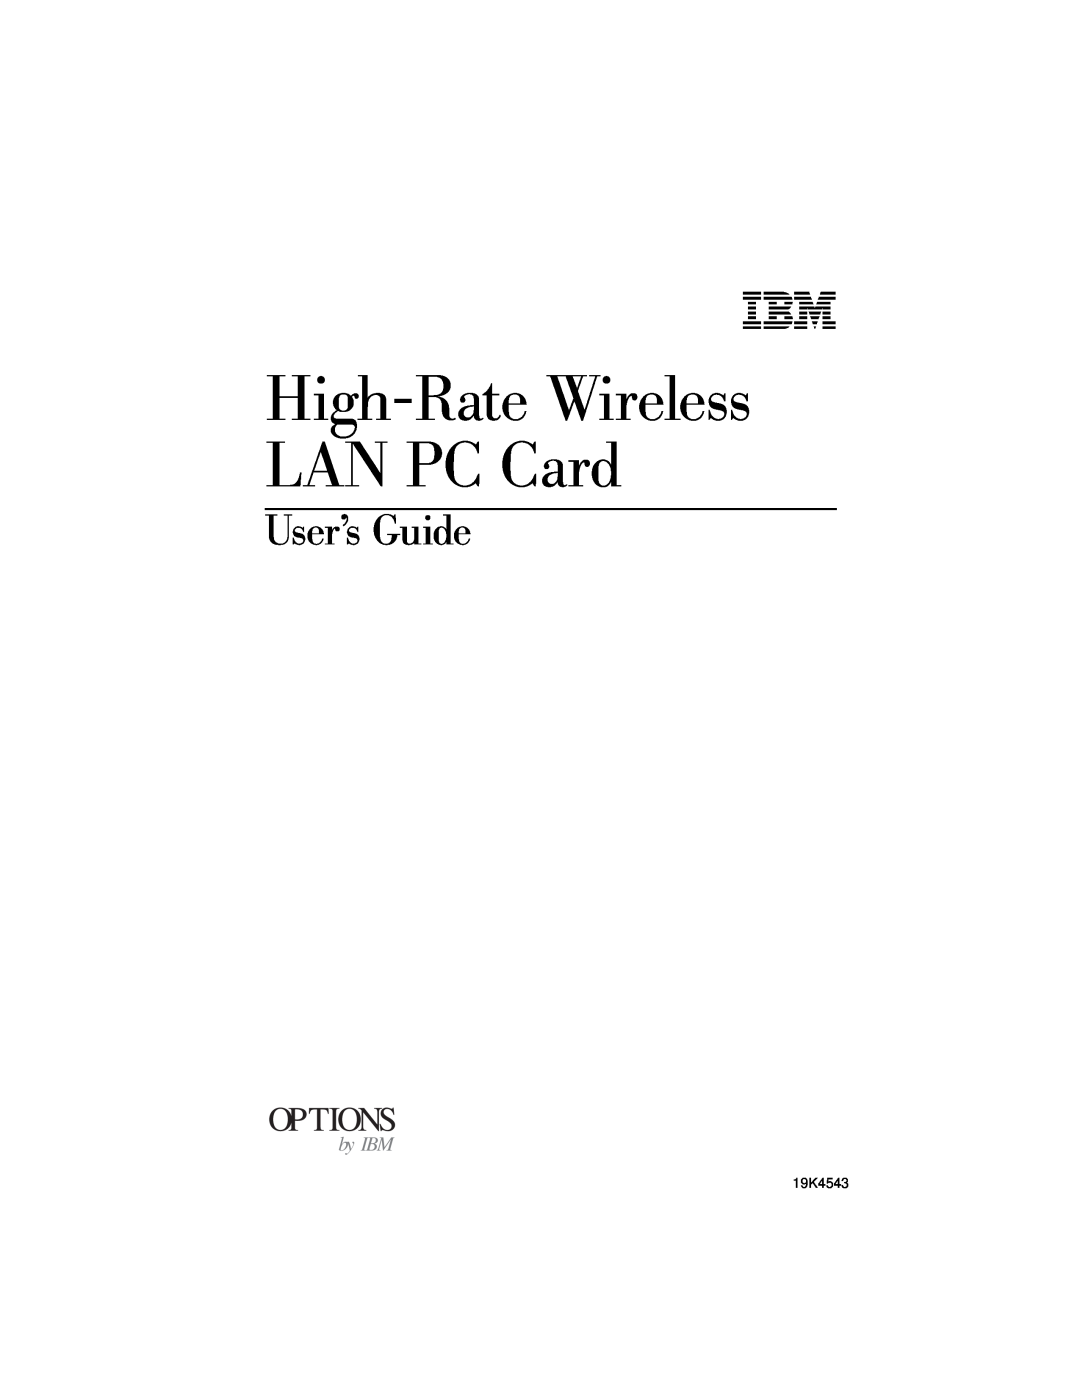 IBM 19K4543 manual User’s Guide, Options, by IBM 